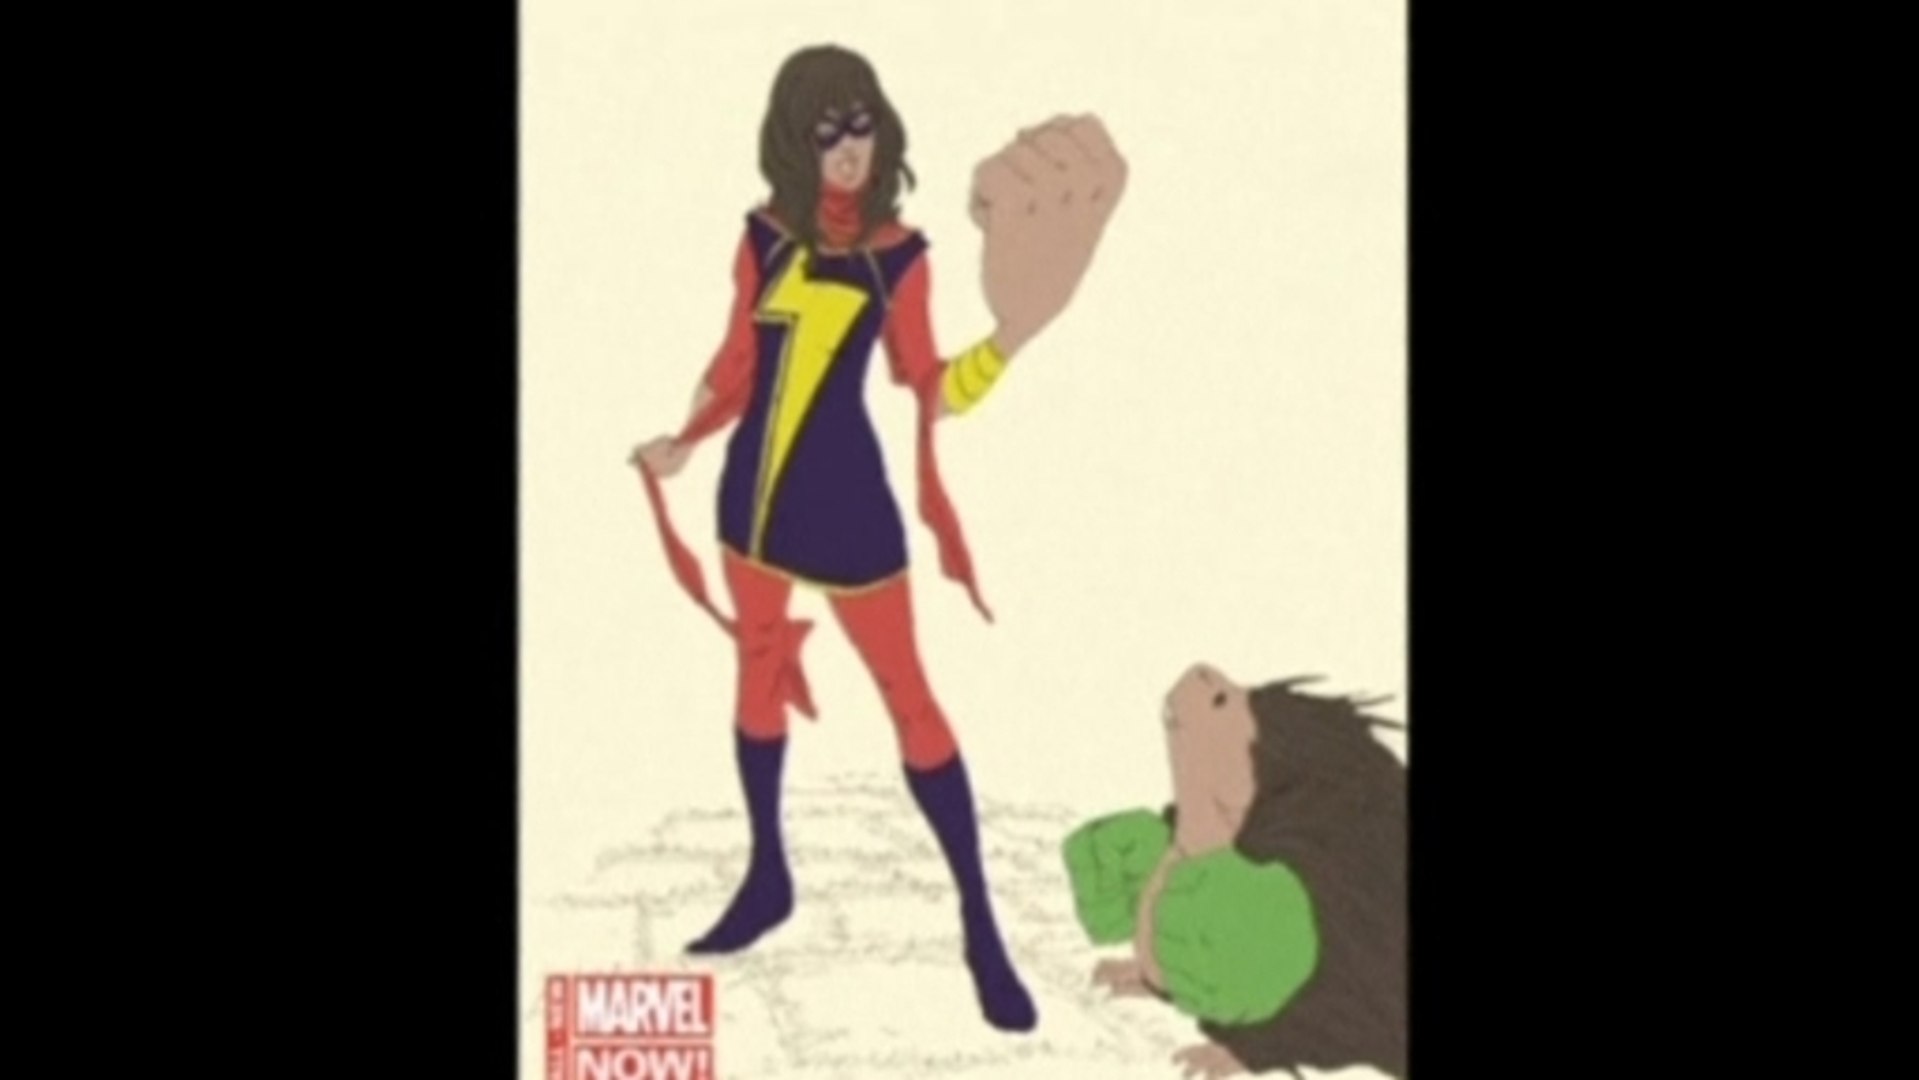 Marvel Comics introduces its first Muslim teenage girl superhero